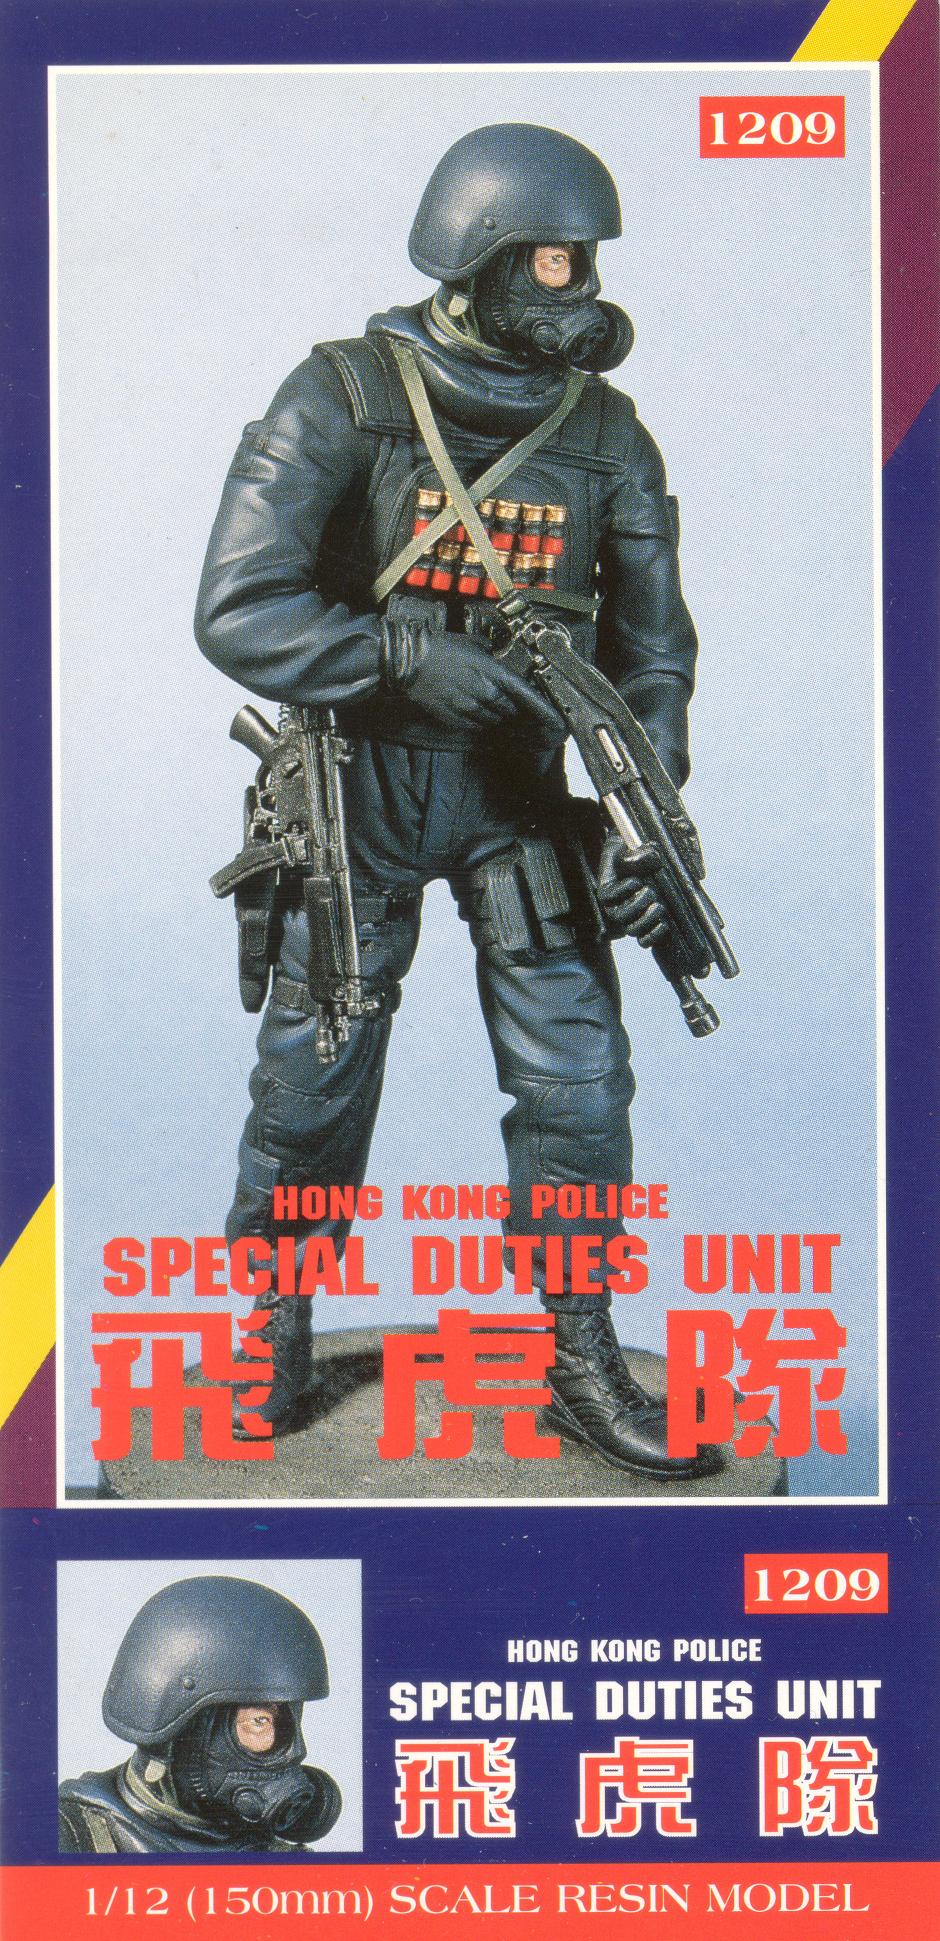 1209 Hong Kong Police Special Duties Unit